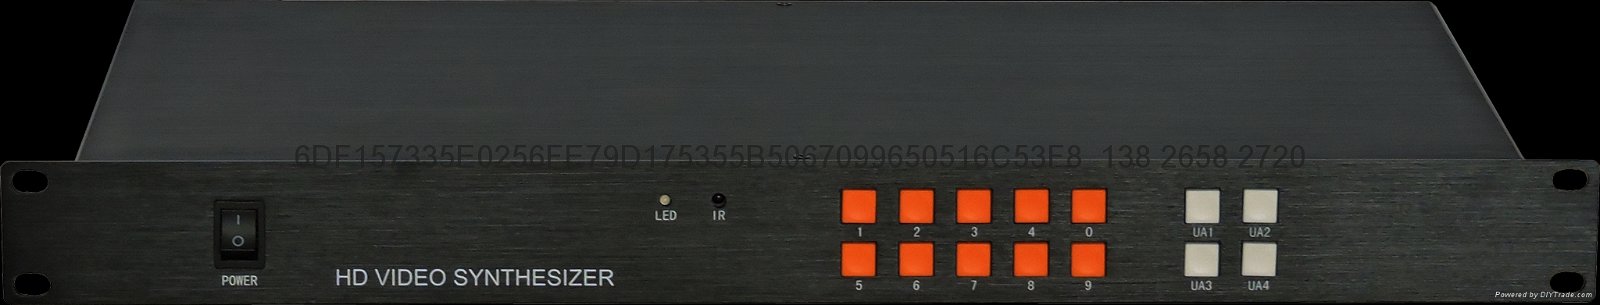 TK-FH41高清畫面分割器 高清HDML/VGA分割器